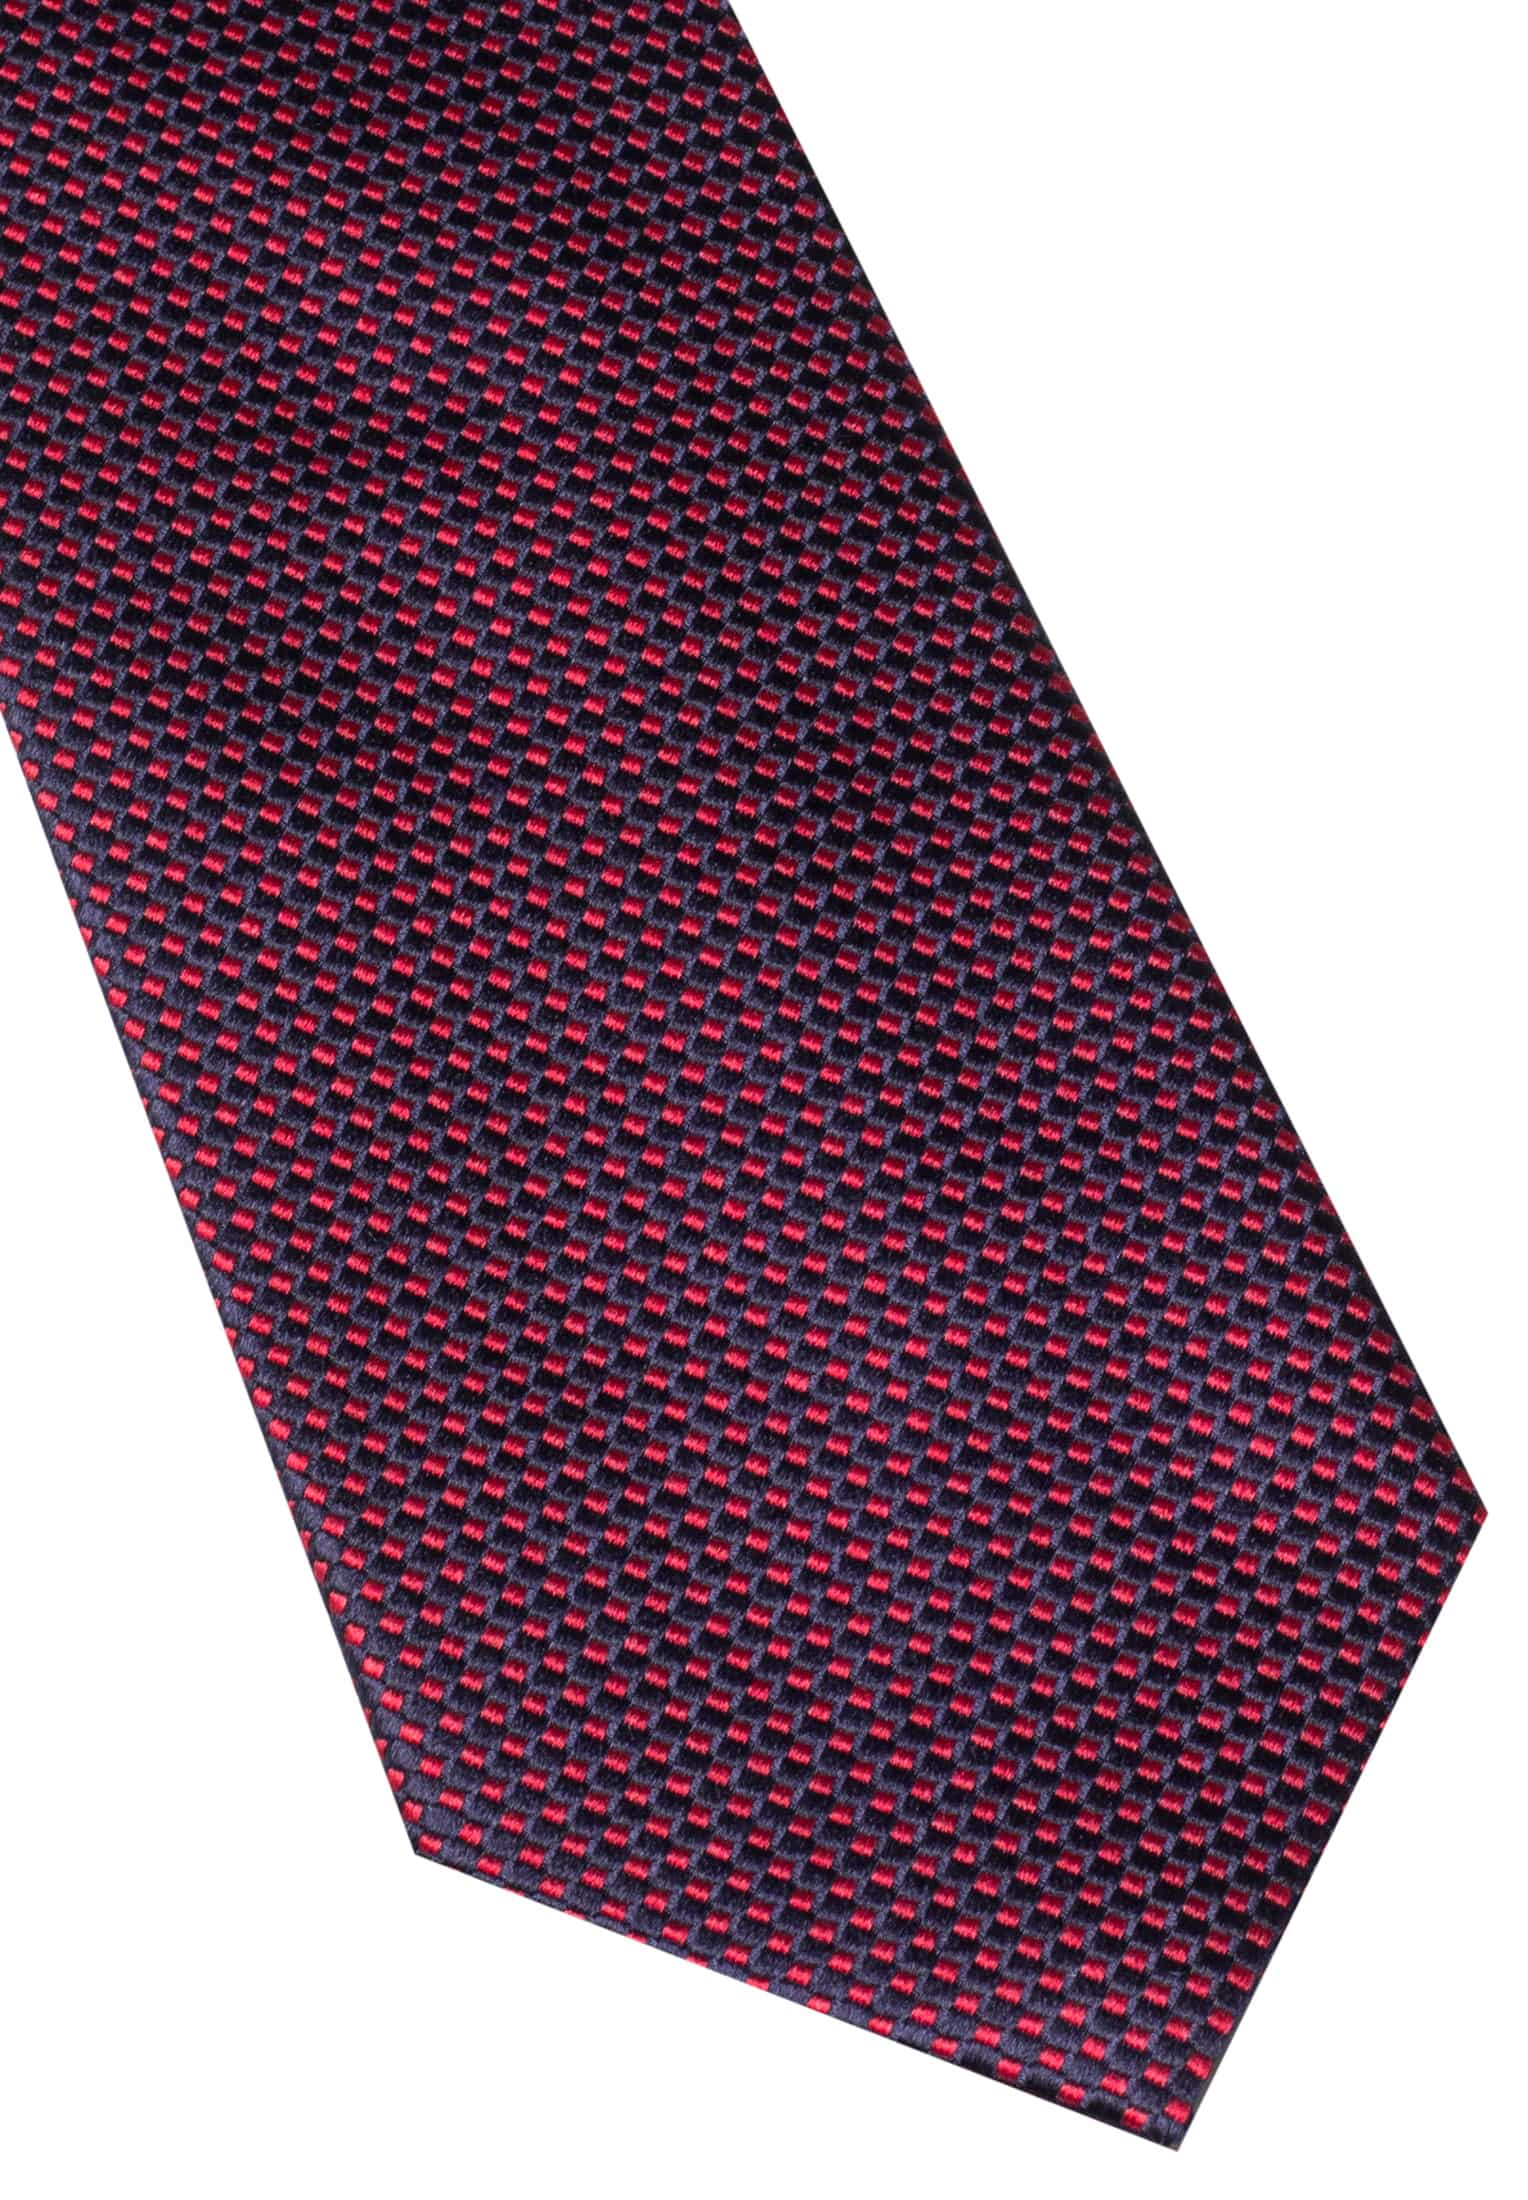 Krawatte in navy/rot strukturiert | | | 1AC00534-81-89-142 142 navy/rot